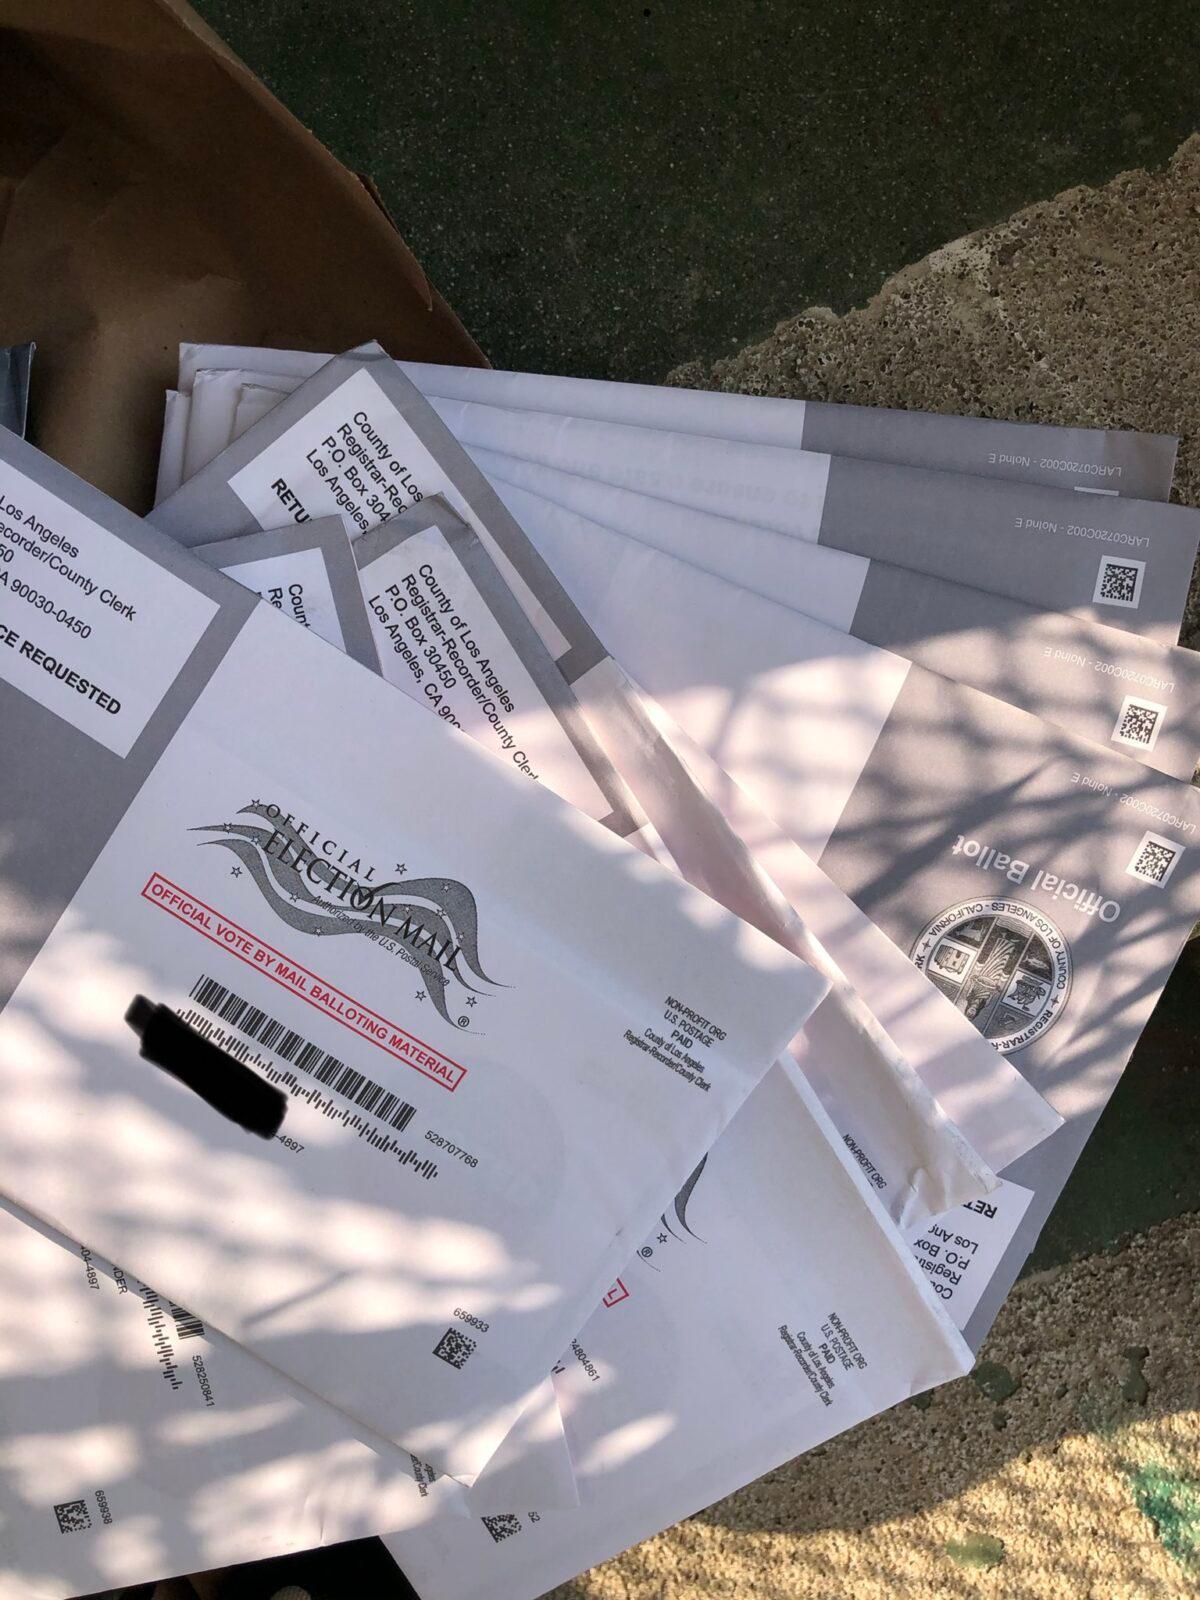 Discarded ballots found in Santa Monica, Calif., Oct. 8, 2020. (Courtesy of Osvaldo Jiménez)